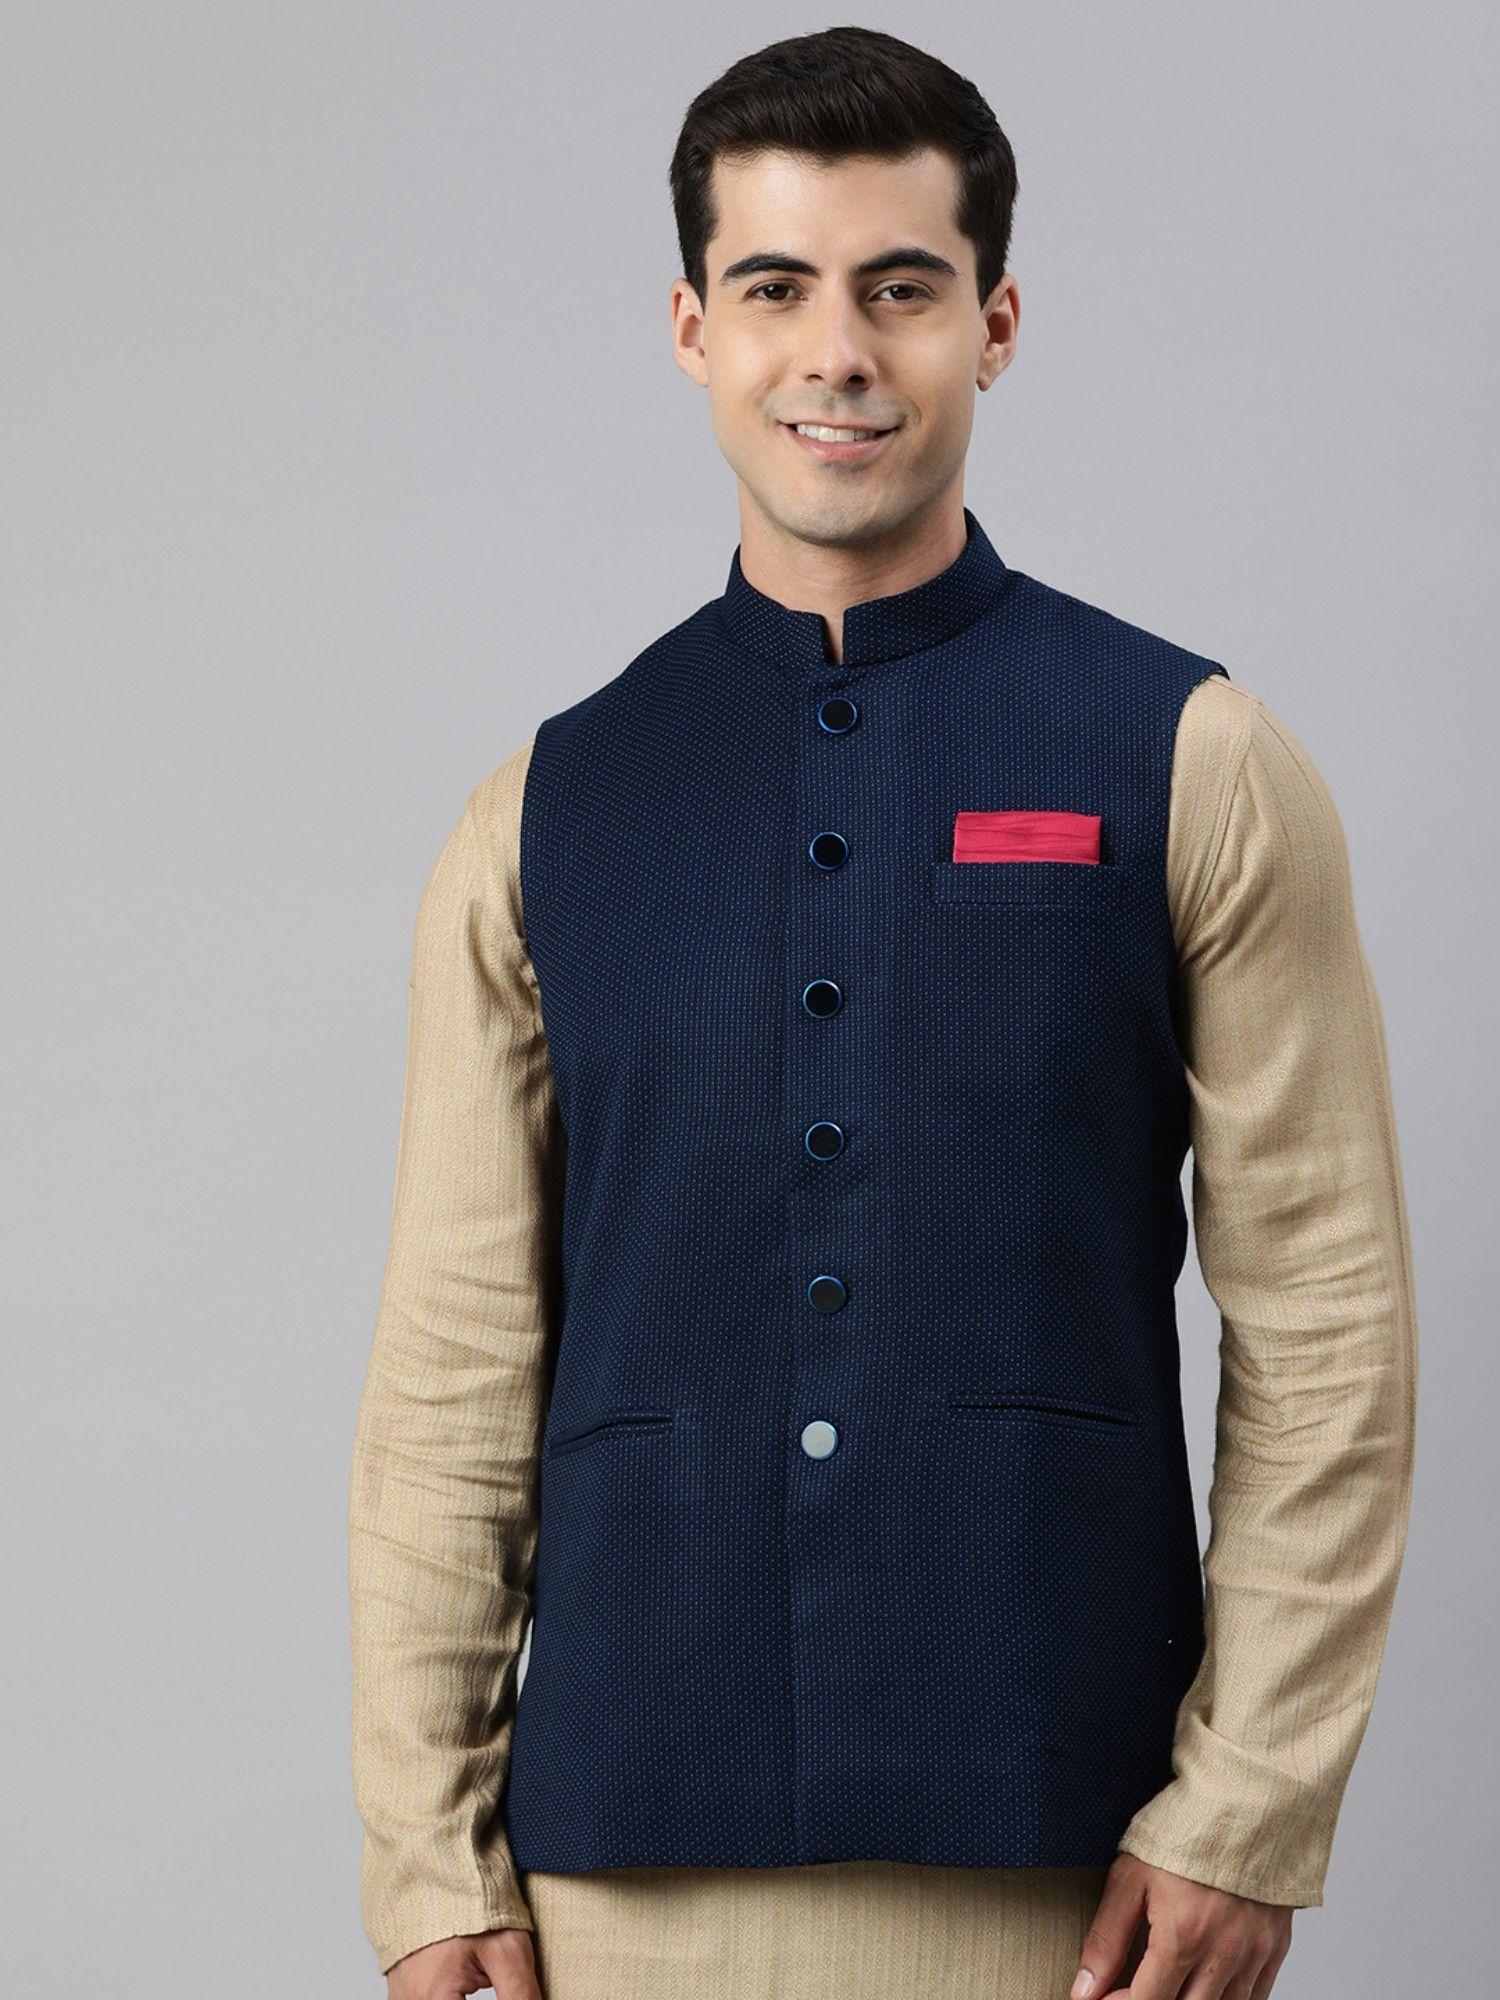 navy-blue-woven-blended-rayon-sleeveless-nehru-jacket